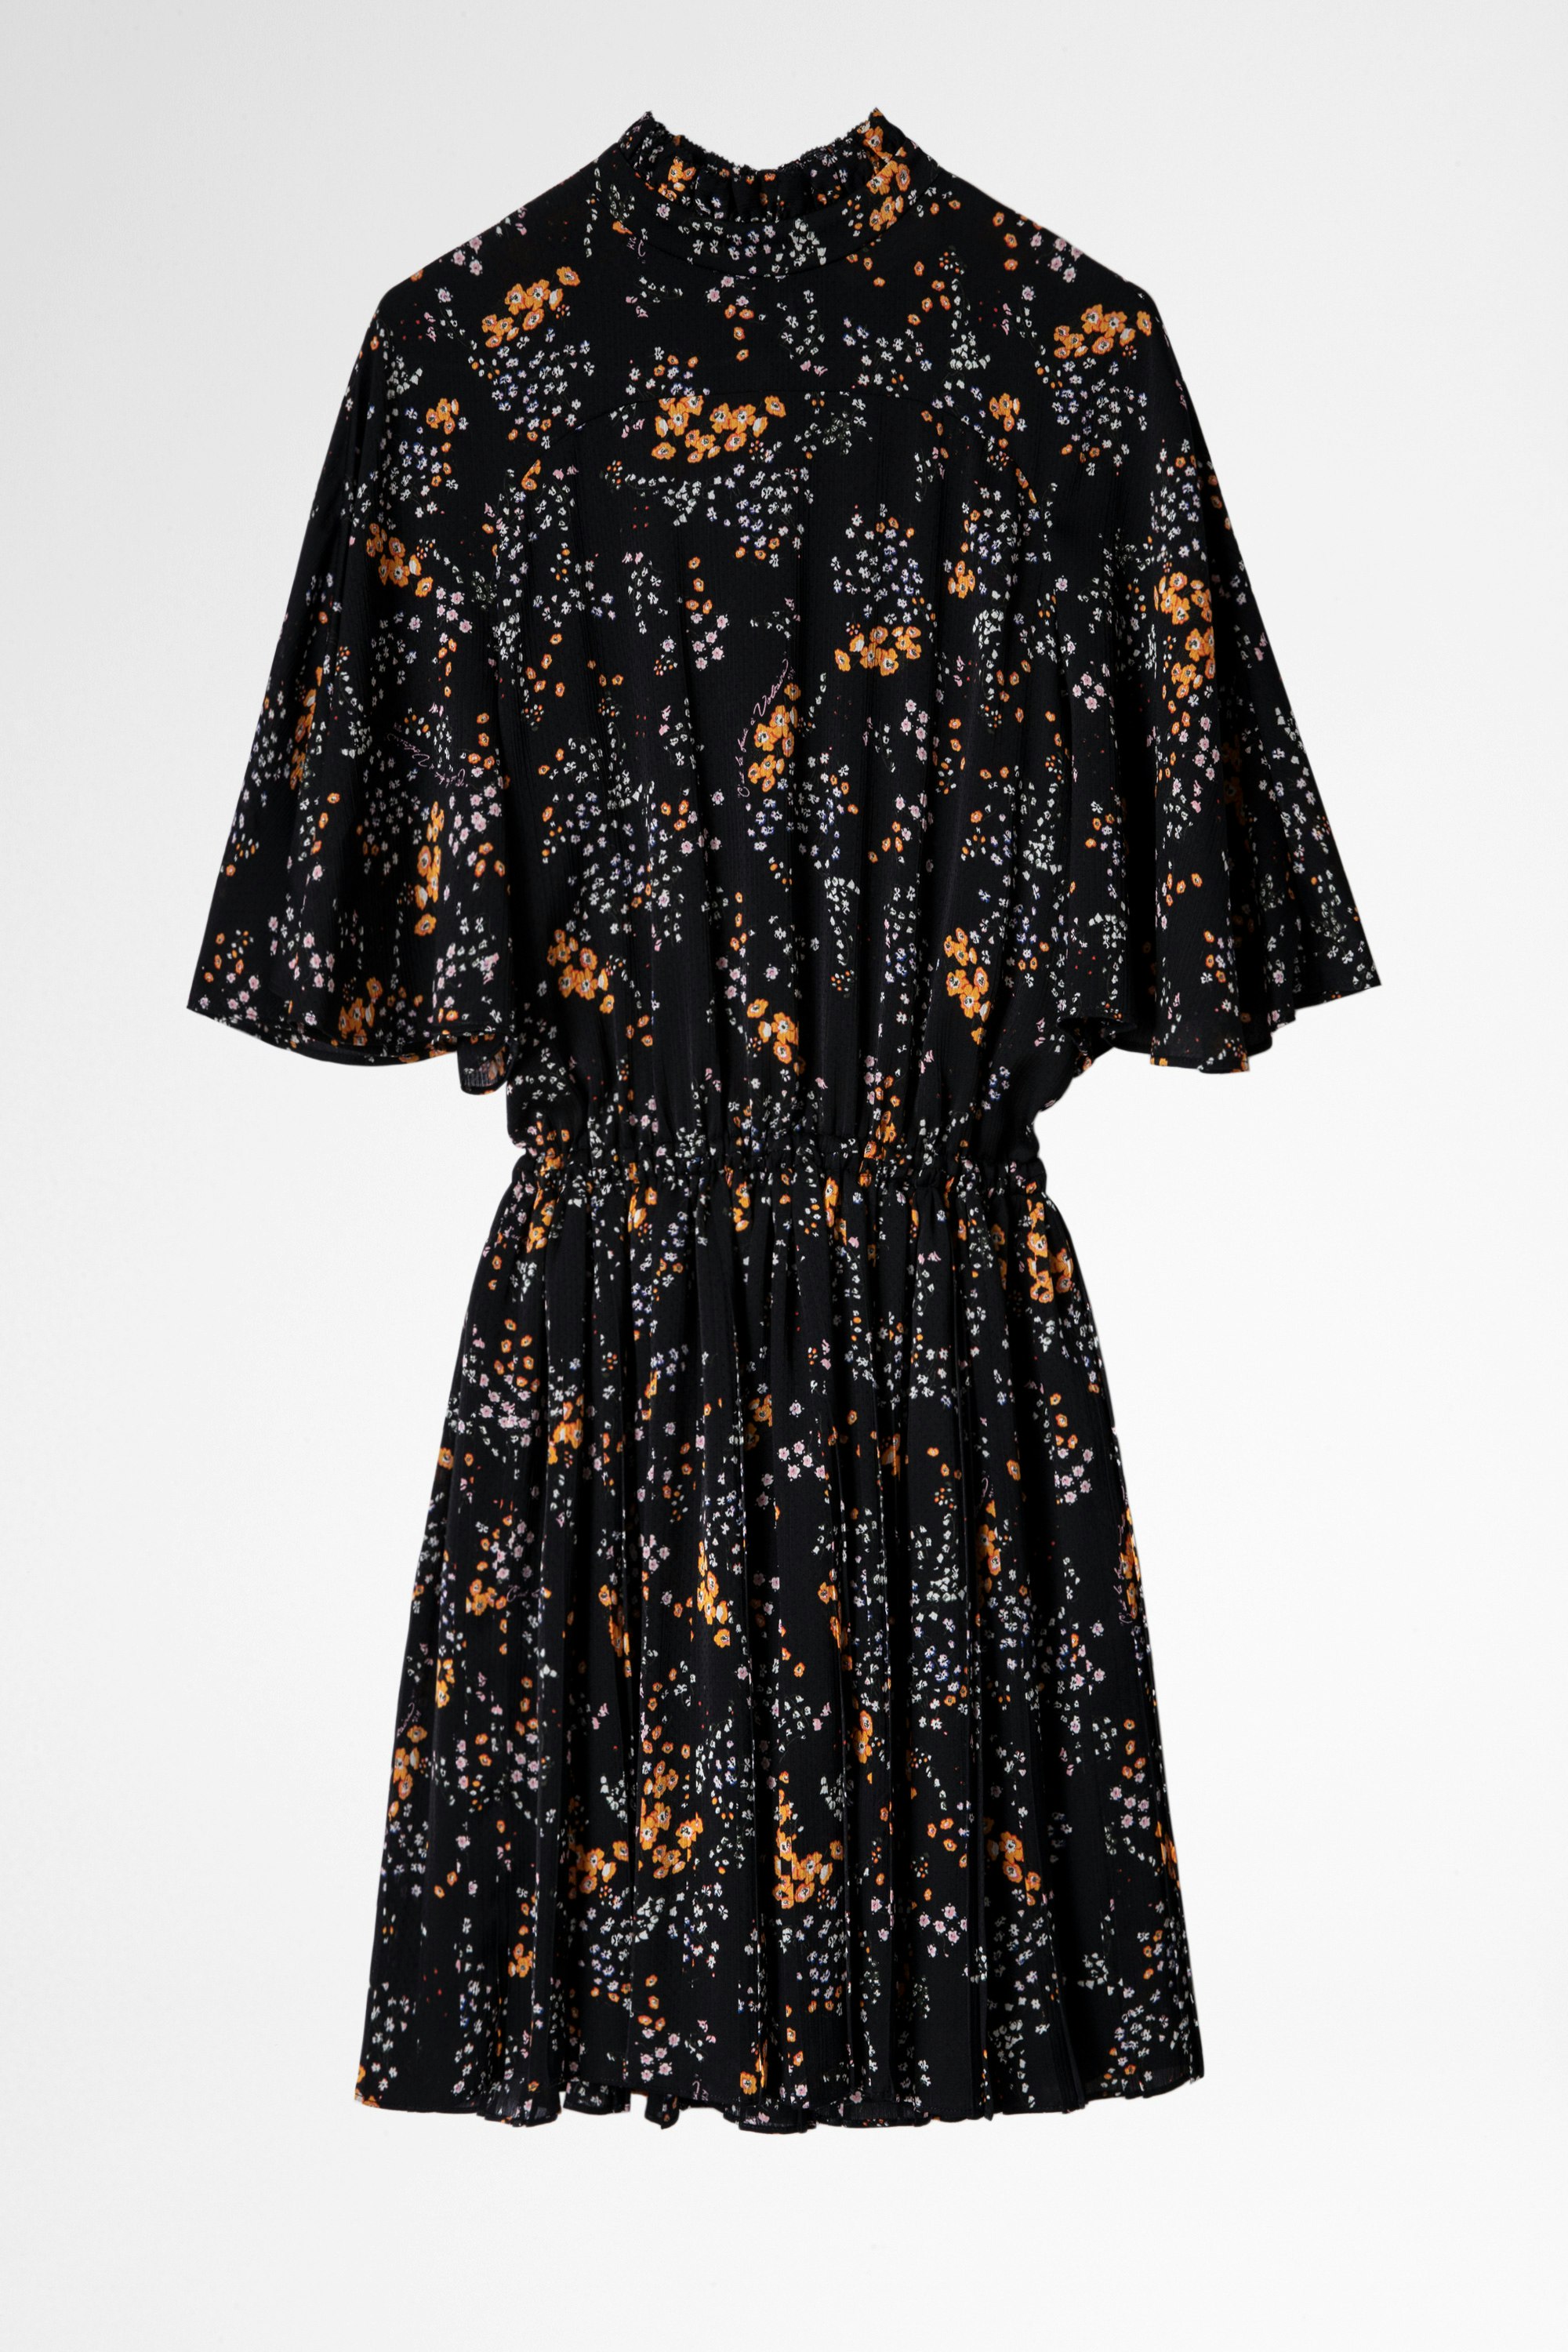 Roza Spark Dress Women's black asymmetric mini dress with floral print